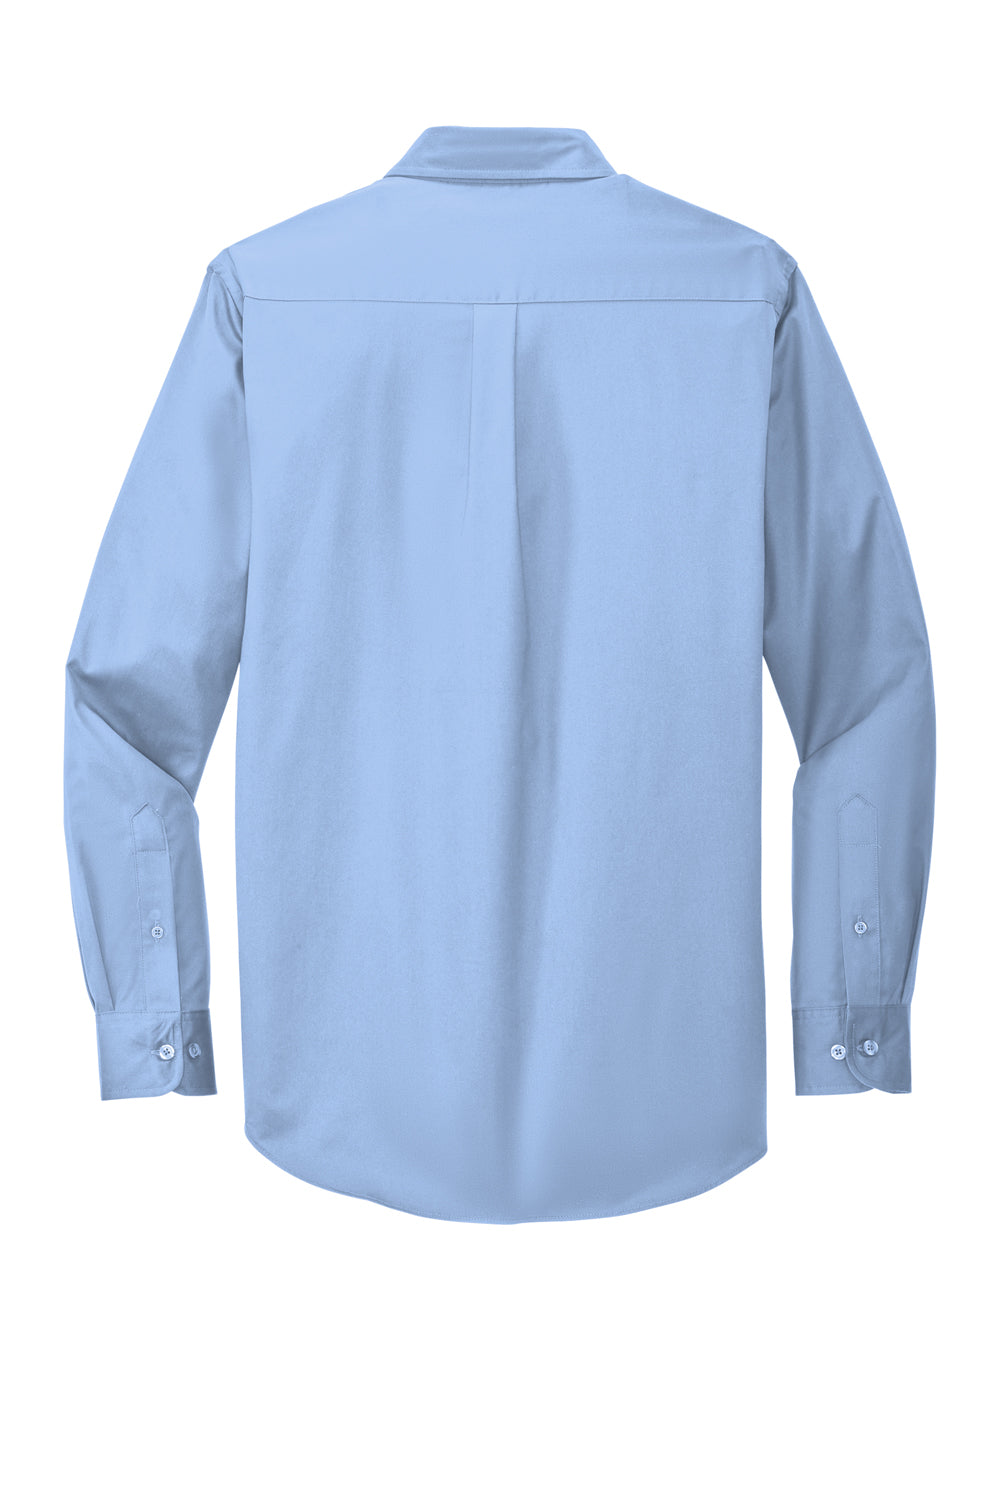 Pilot Pocket Shirt  Long sleeve shirts, Pocket shirt, Louis